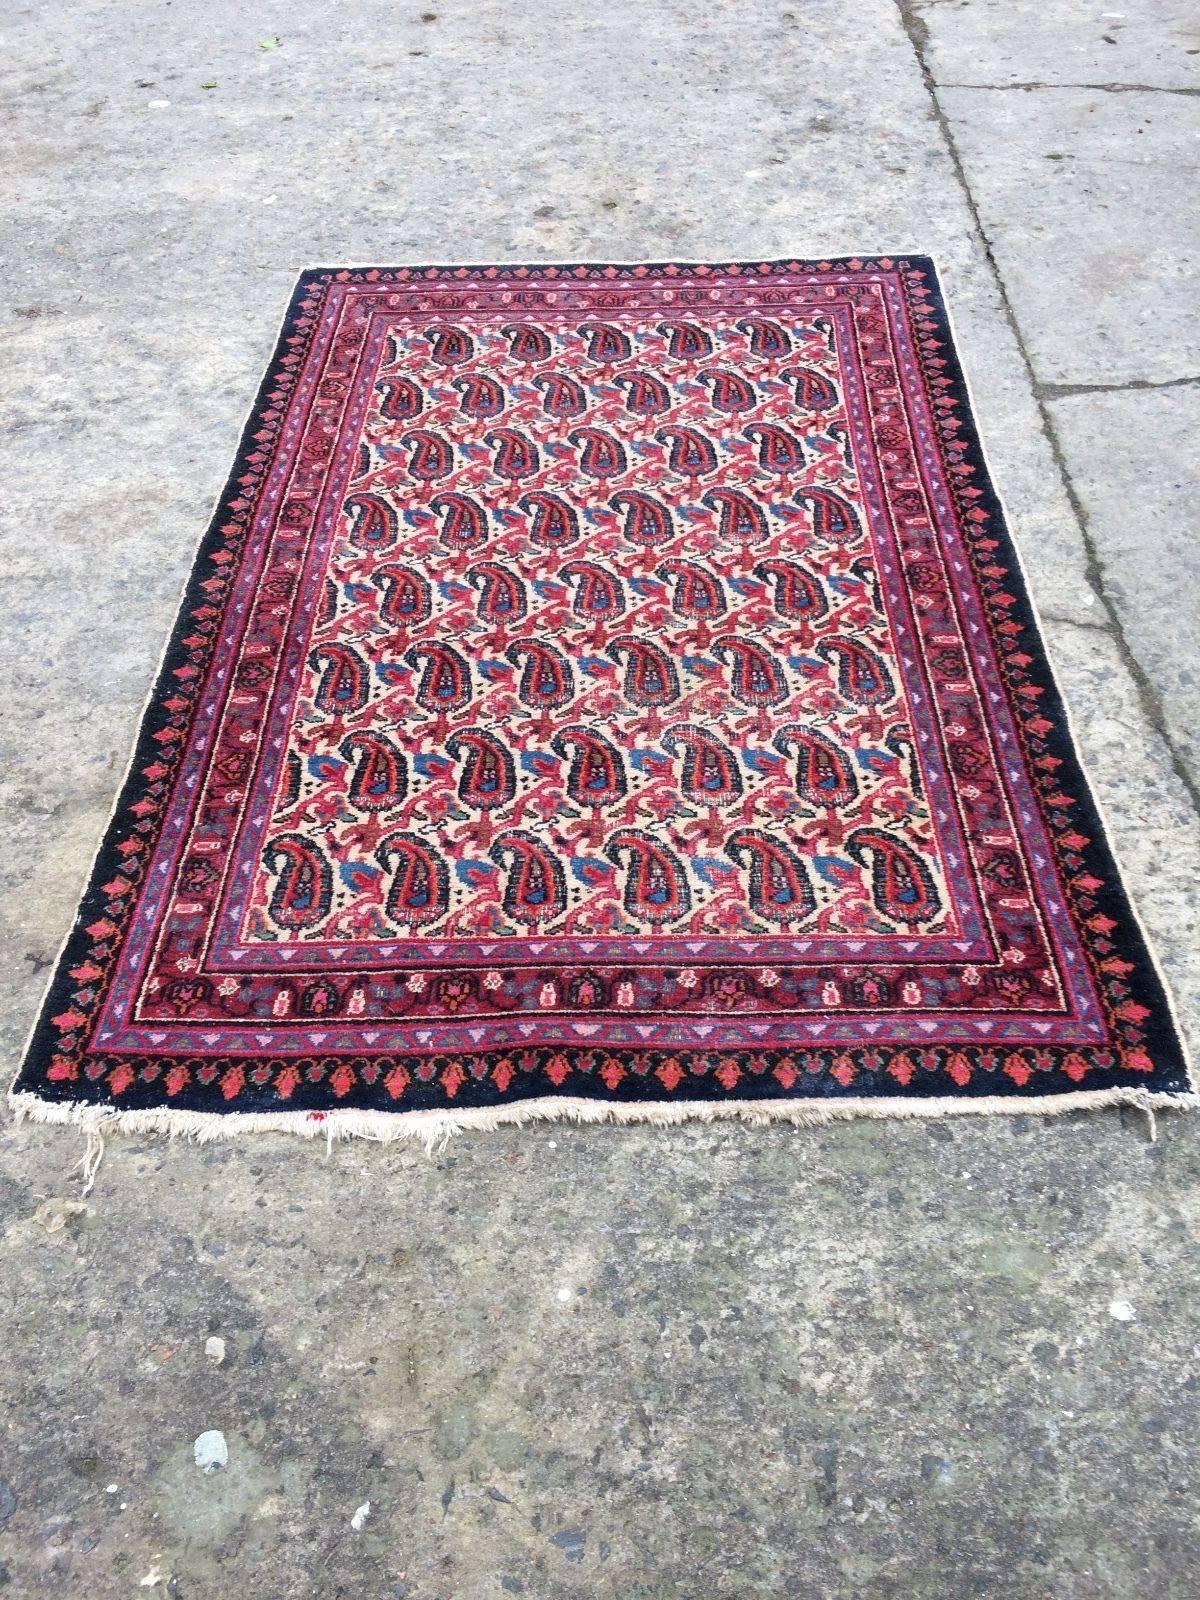 Kashan Rug Carpet 100% Wool Handwoven Reds In Good Condition For Sale In Longdon, Tewkesbury